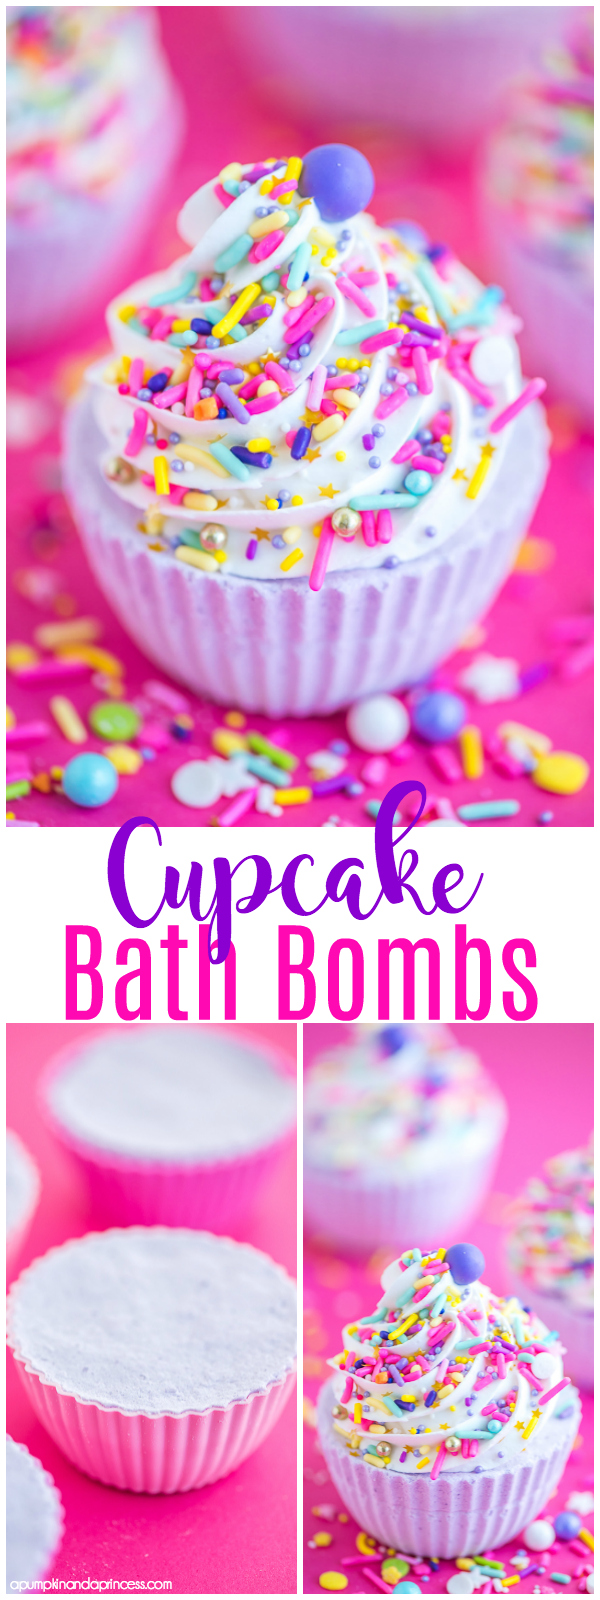 Bombas de baño para cupcakes de bricolaje